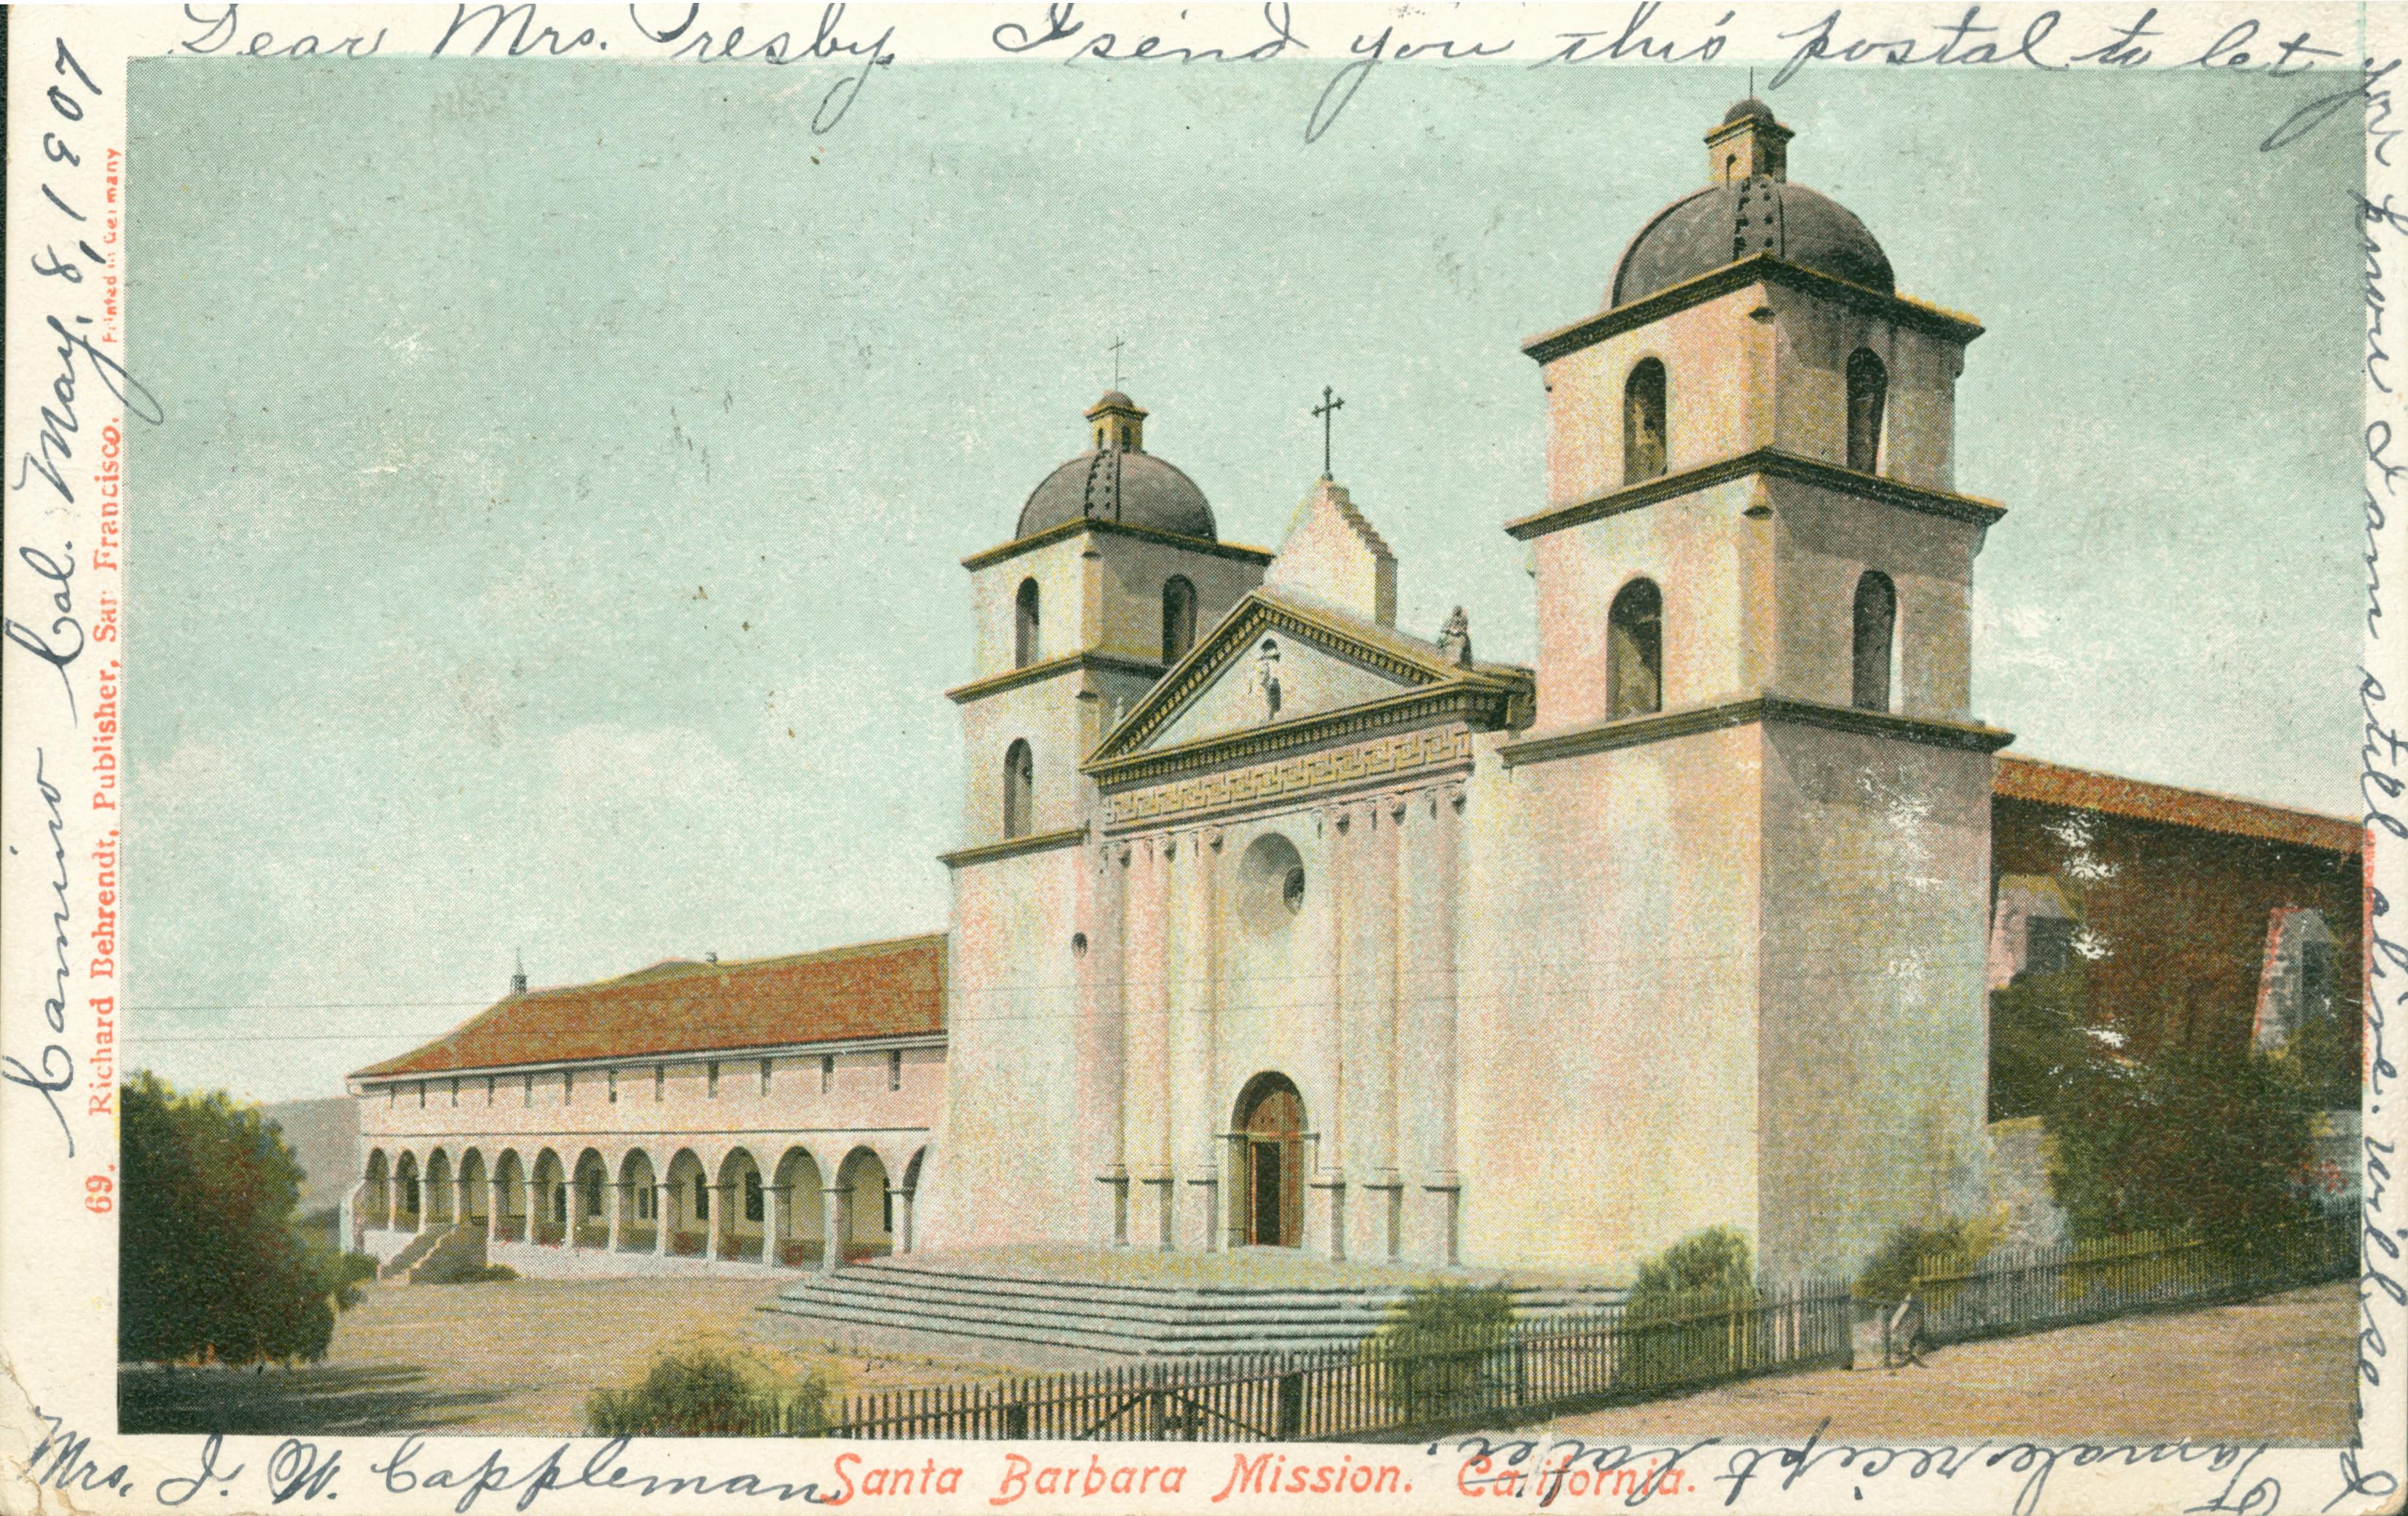 View of Santa Barbara Mission exterior